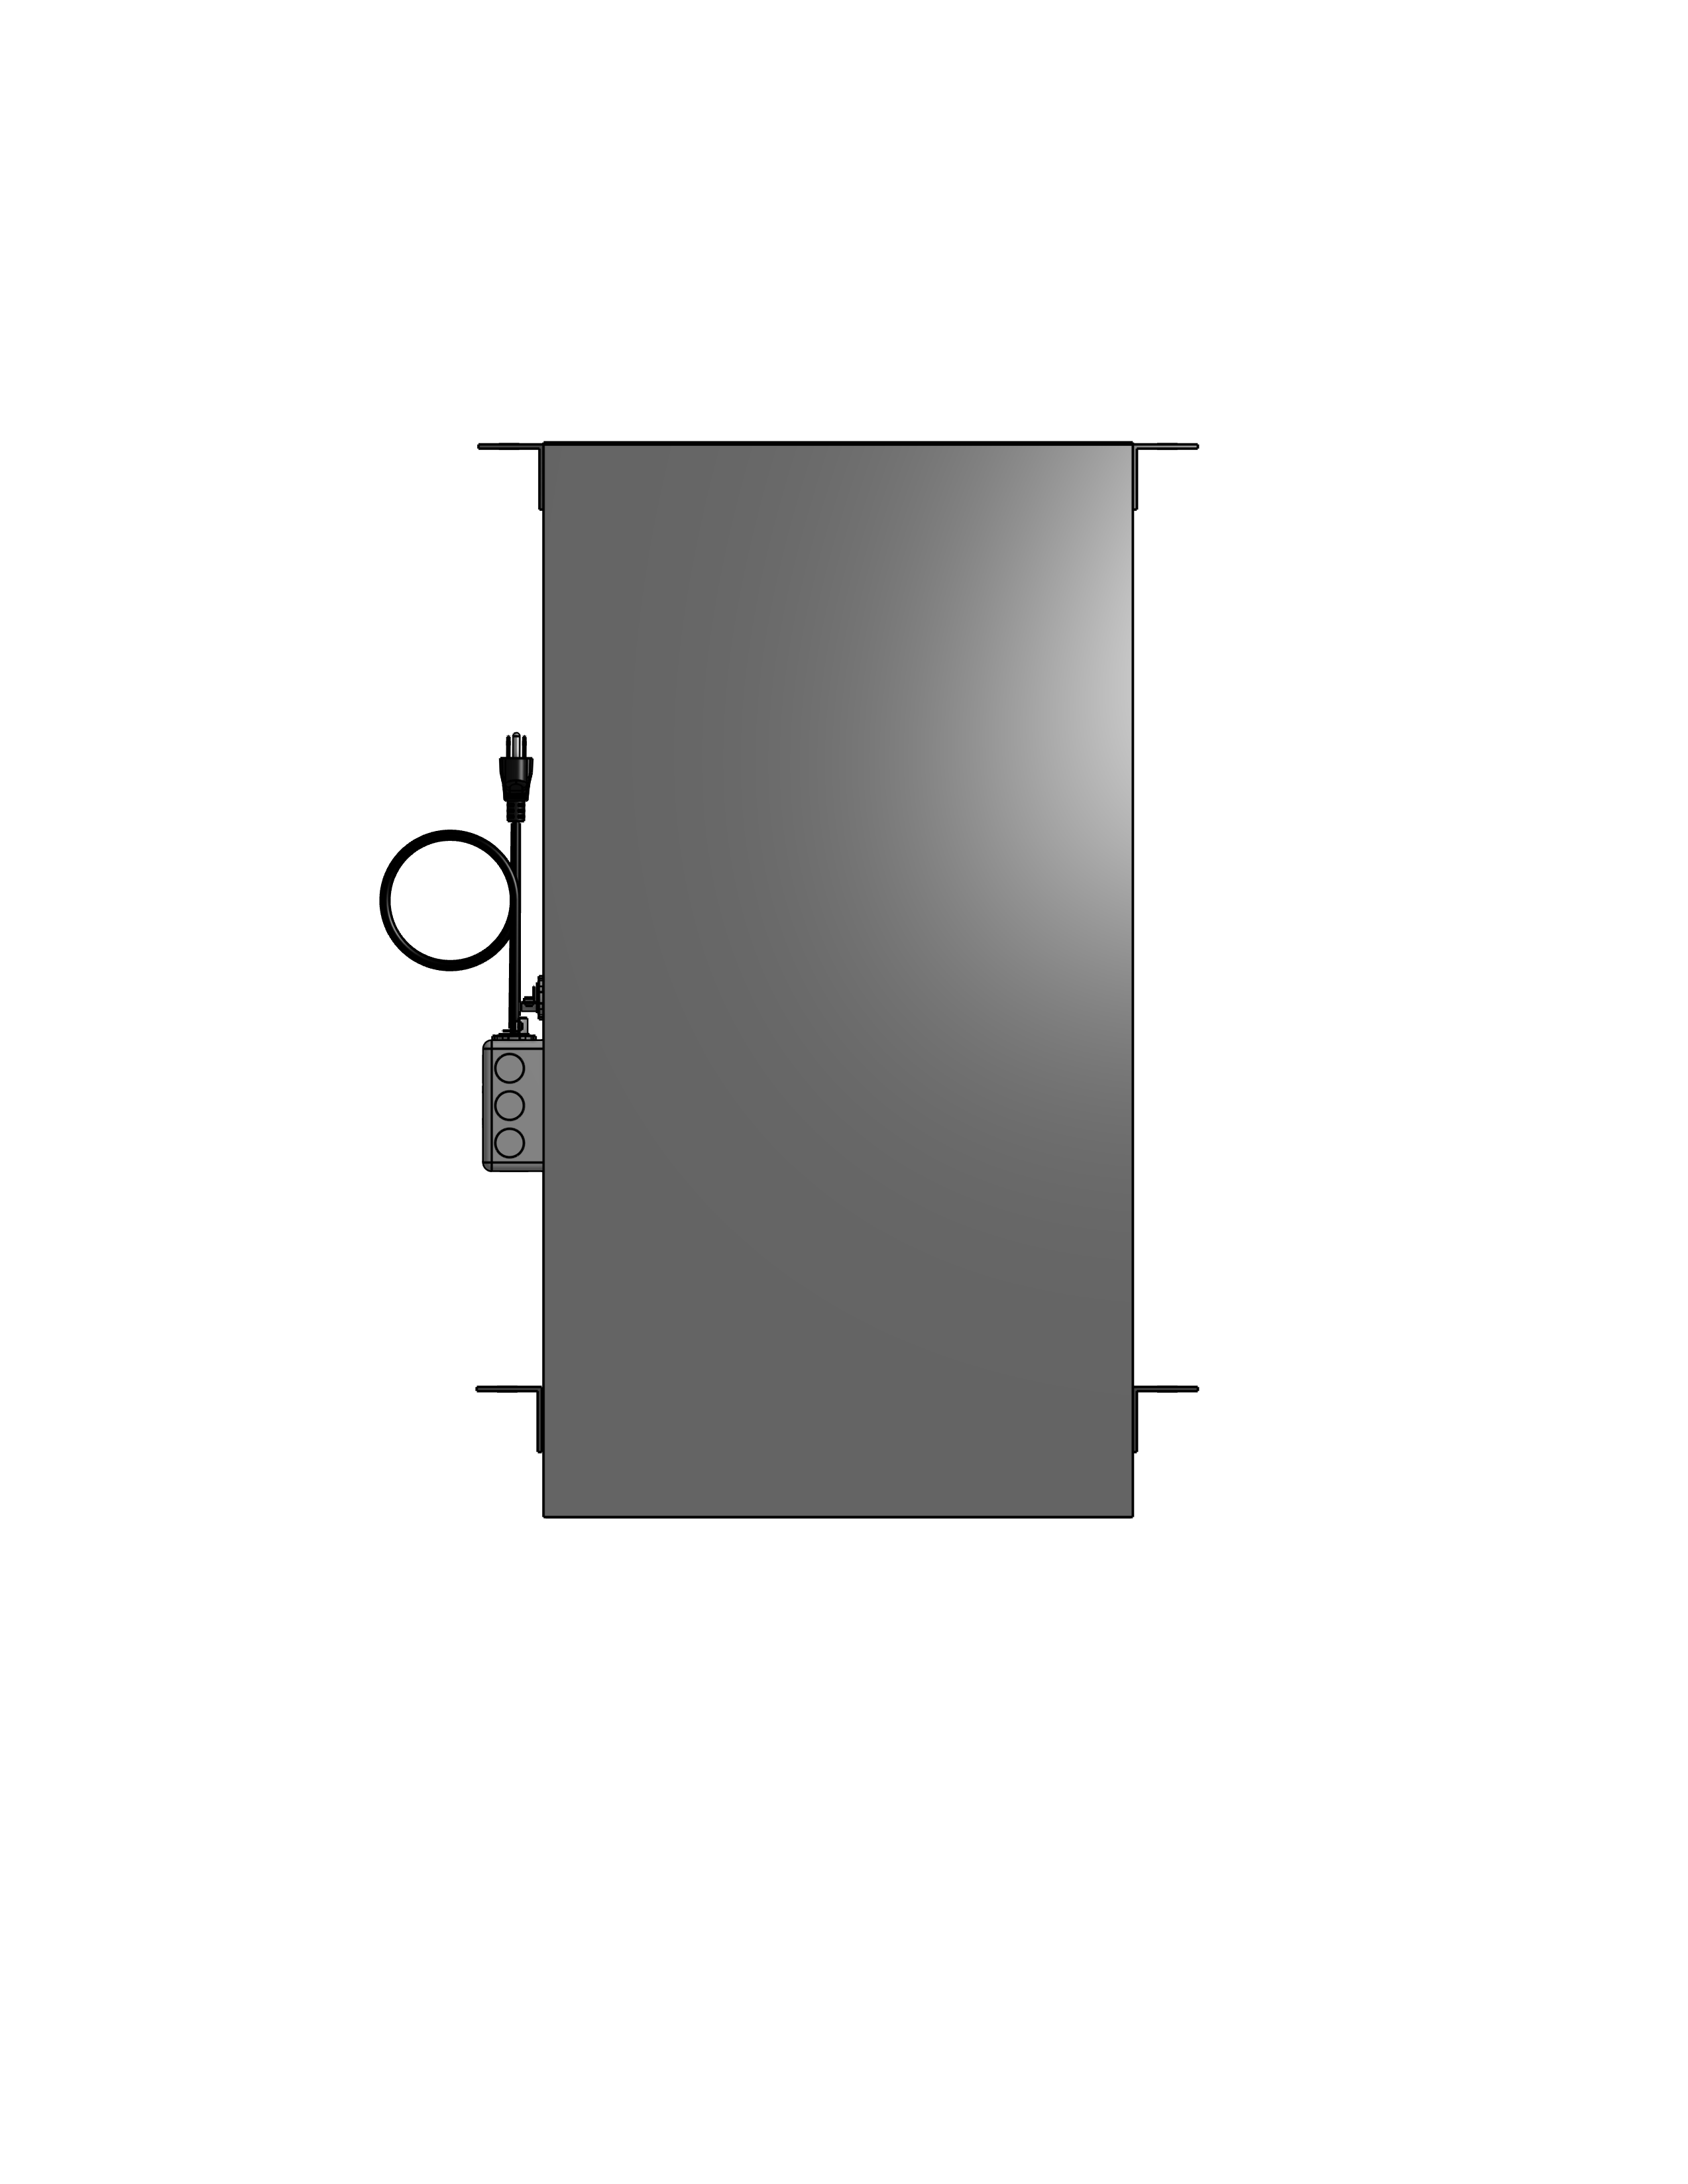 Plenum Enclosed PTZ Camera Lift - Ceiling Mounted - Travel: 96 Inches - Model APTZ-33-96-PE